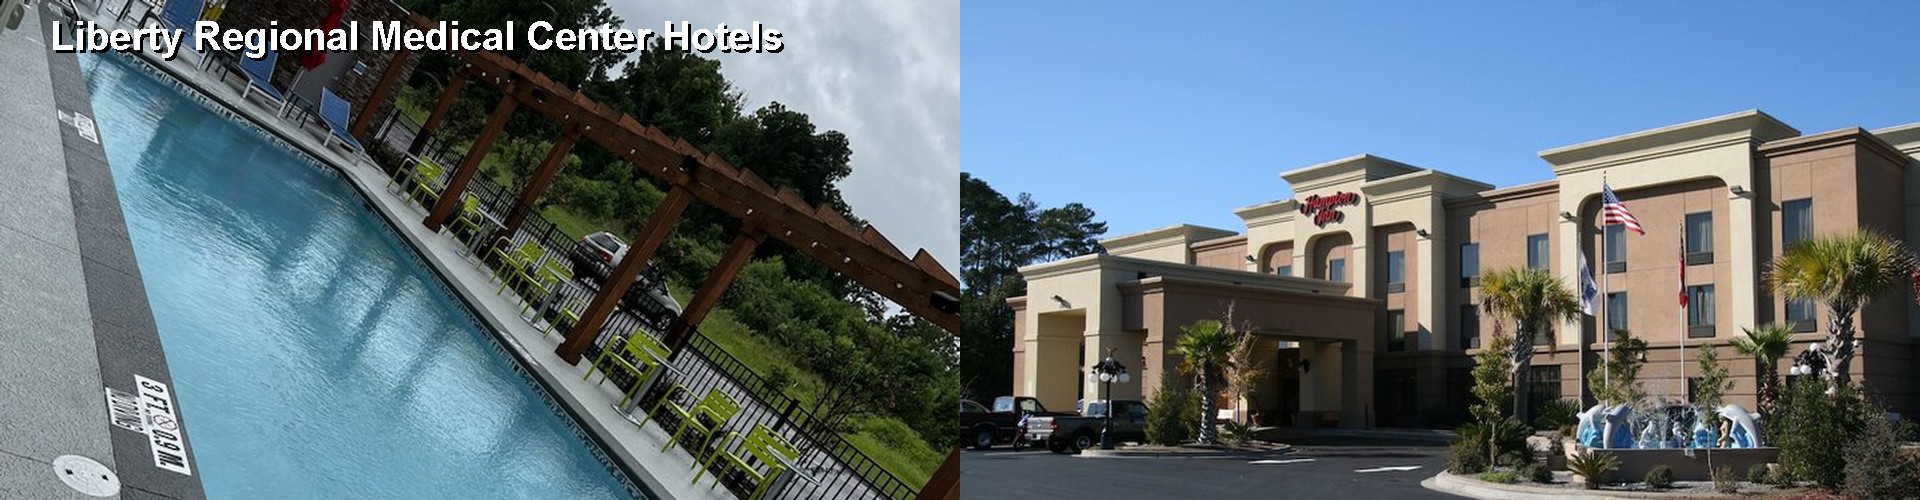 5 Best Hotels near Liberty Regional Medical Center